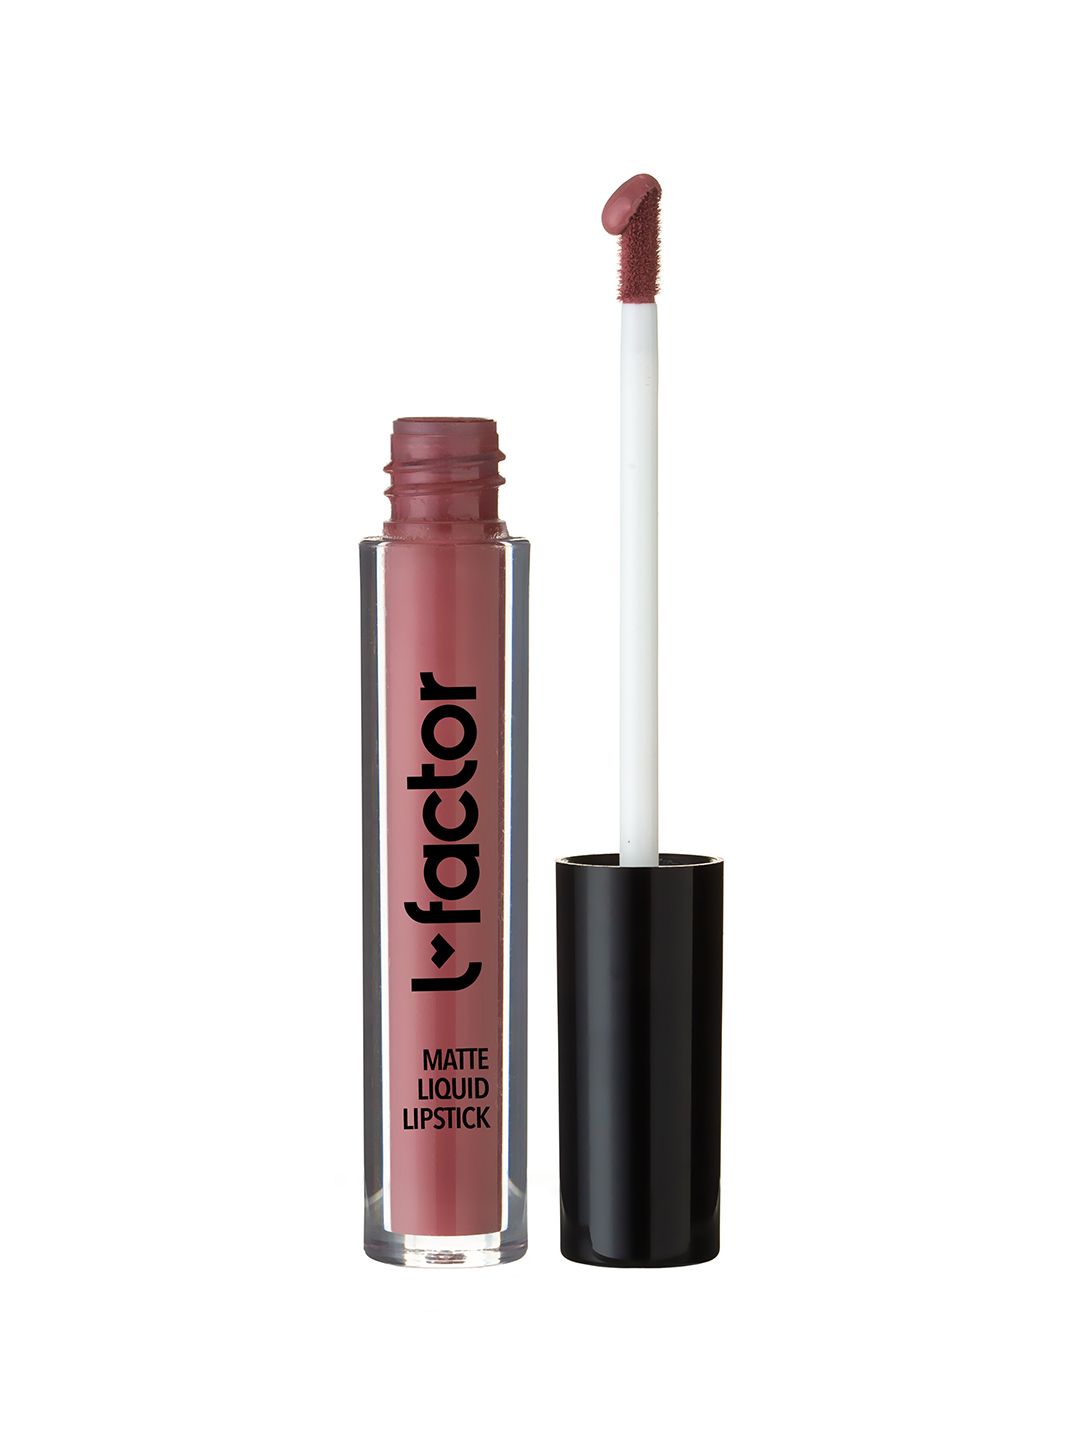 L Factor Cosmetics Matte Liquid Lipstick Warm Hug Price in India